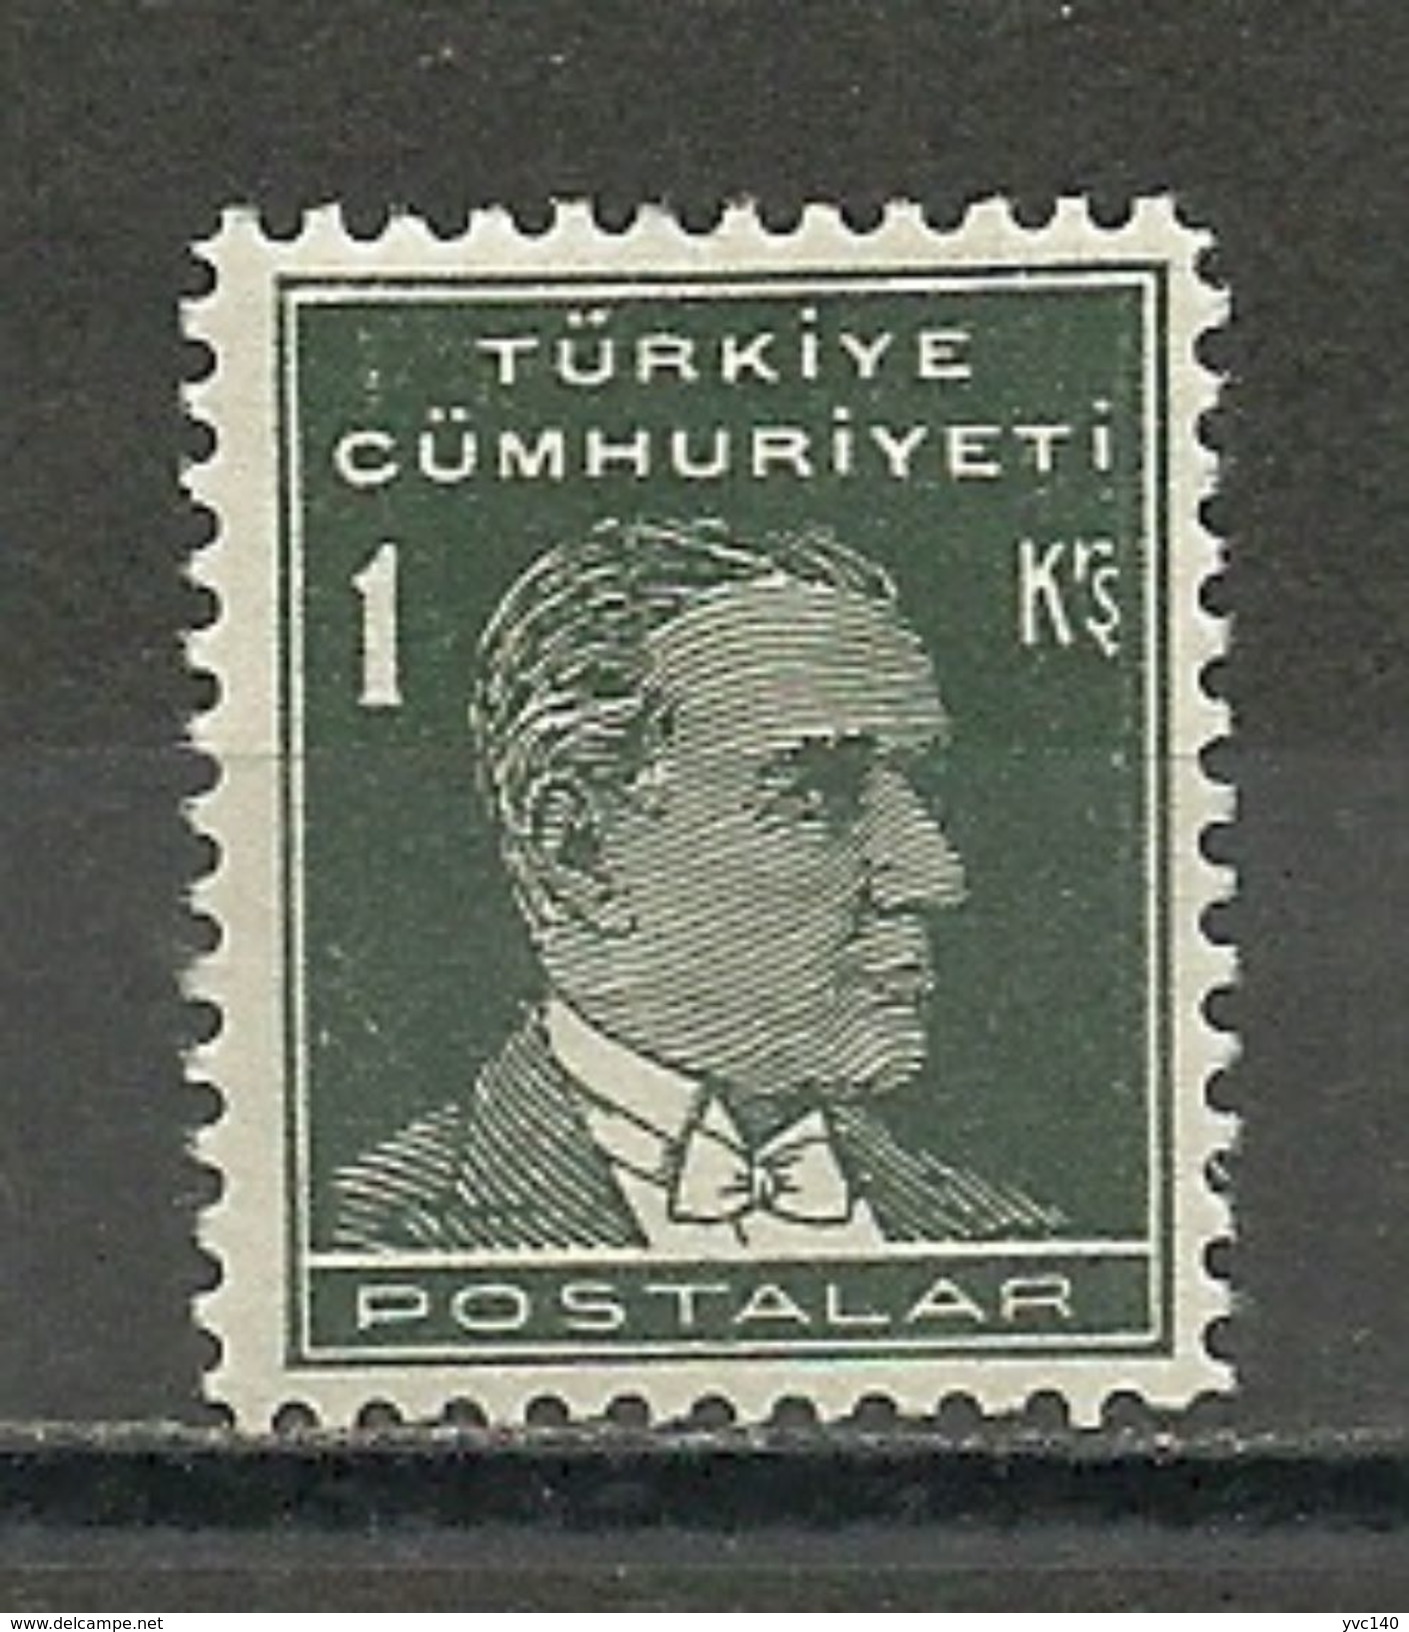 Turkey; 1931 1st Ataturk Issue Stamp 1 K. ERROR ("Postalar" Instead Of "Postalari") - Neufs